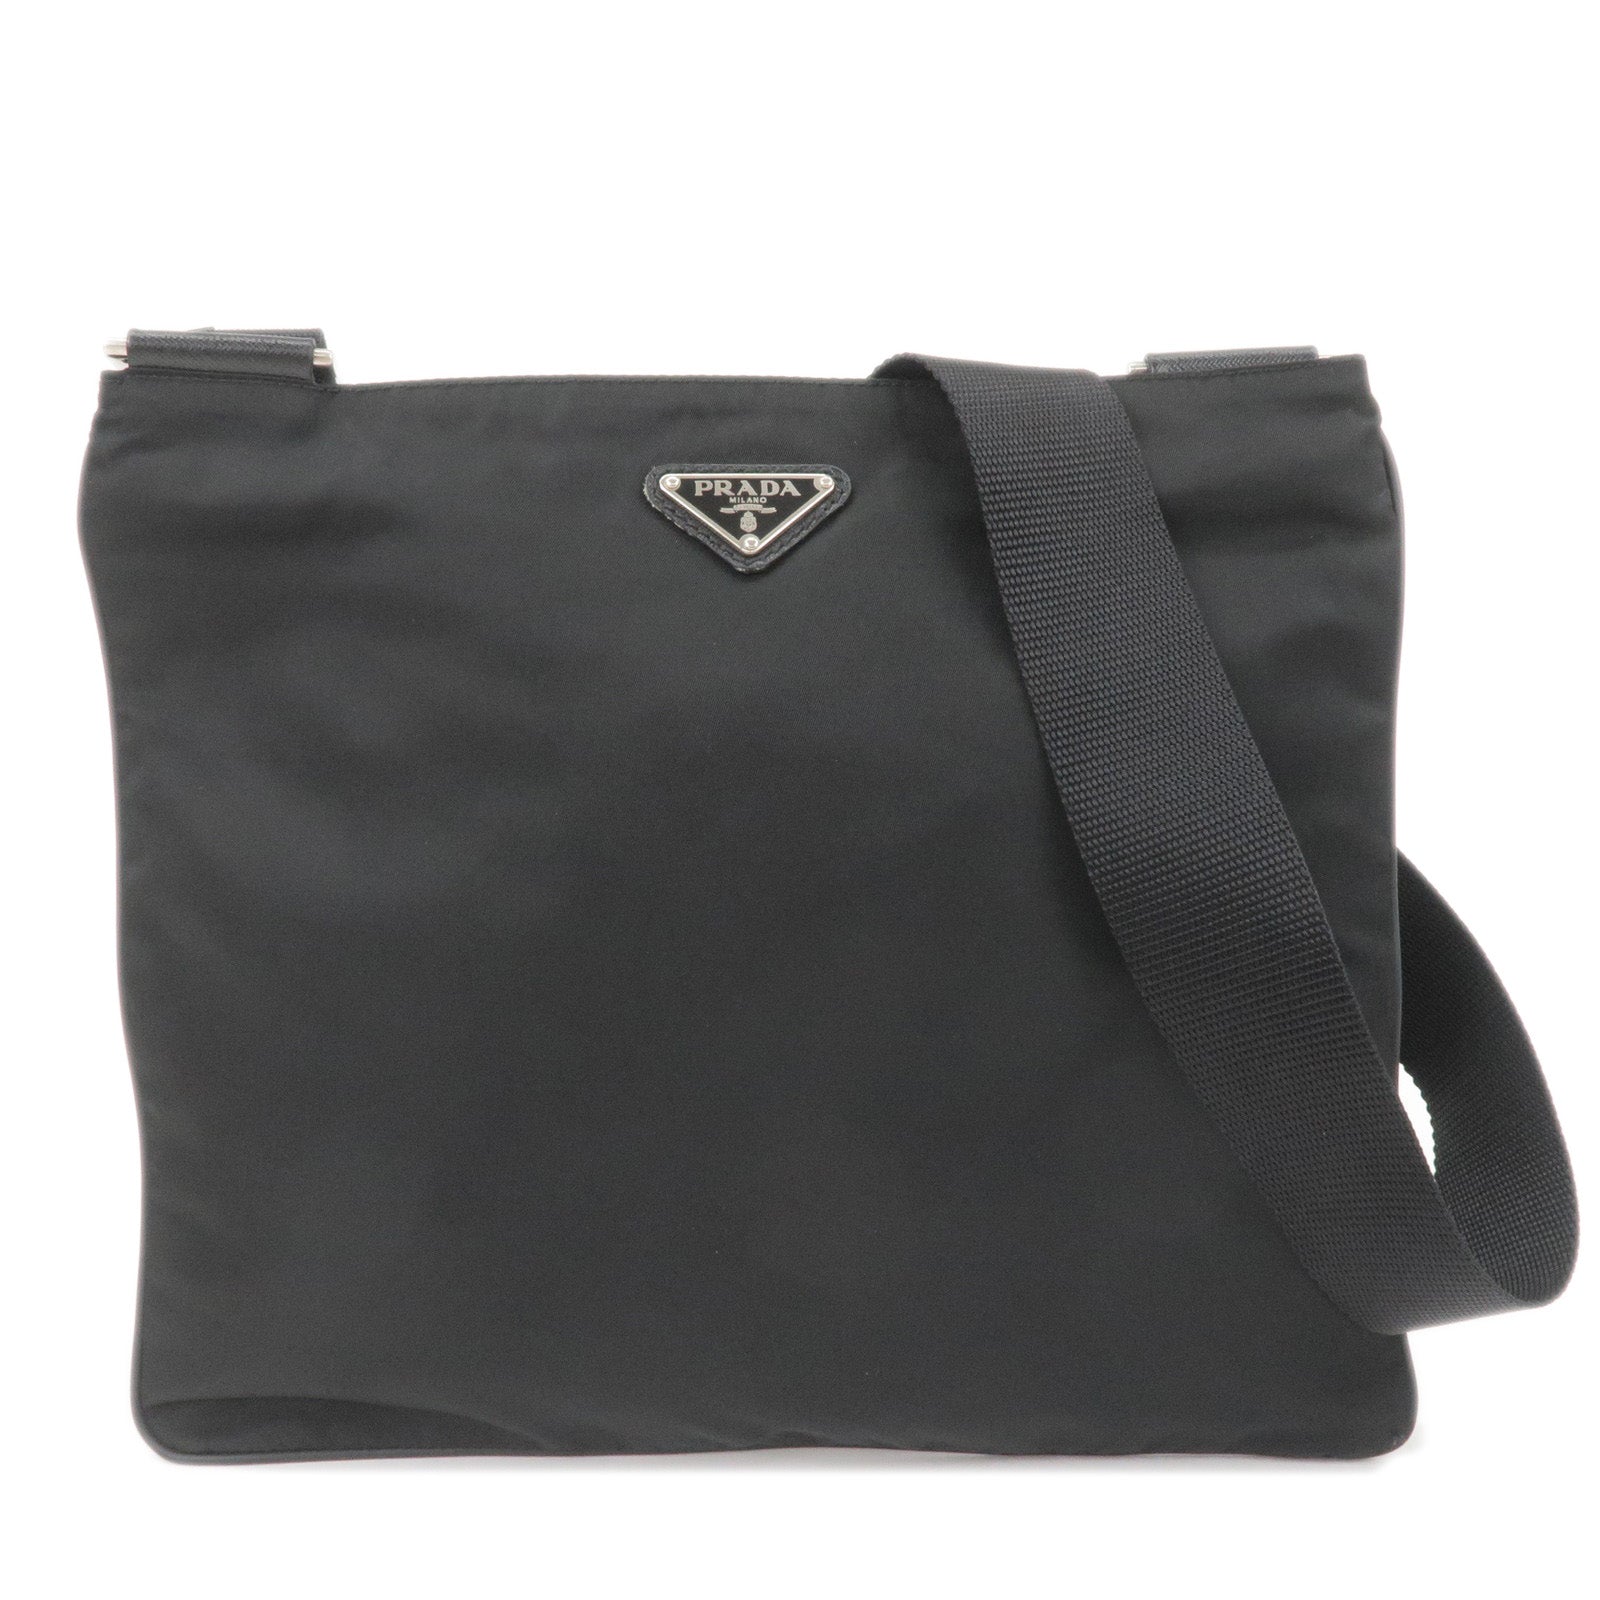 Bag - Cross - PRADA - Logo - ep_vintage luxury Store - Leather